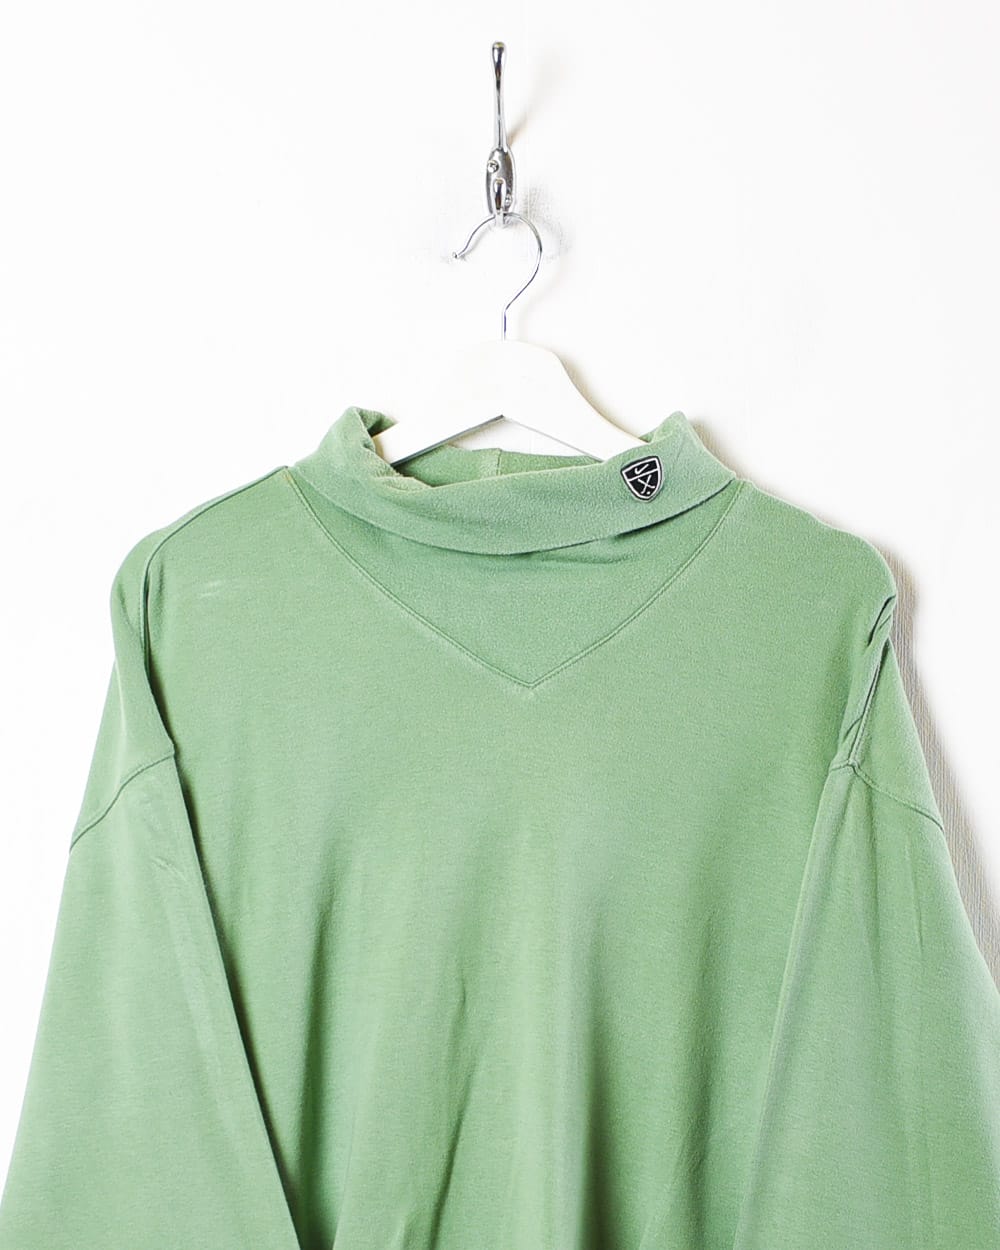 Green Nike Turtle Neck Long Sleeved T-Shirt - Large